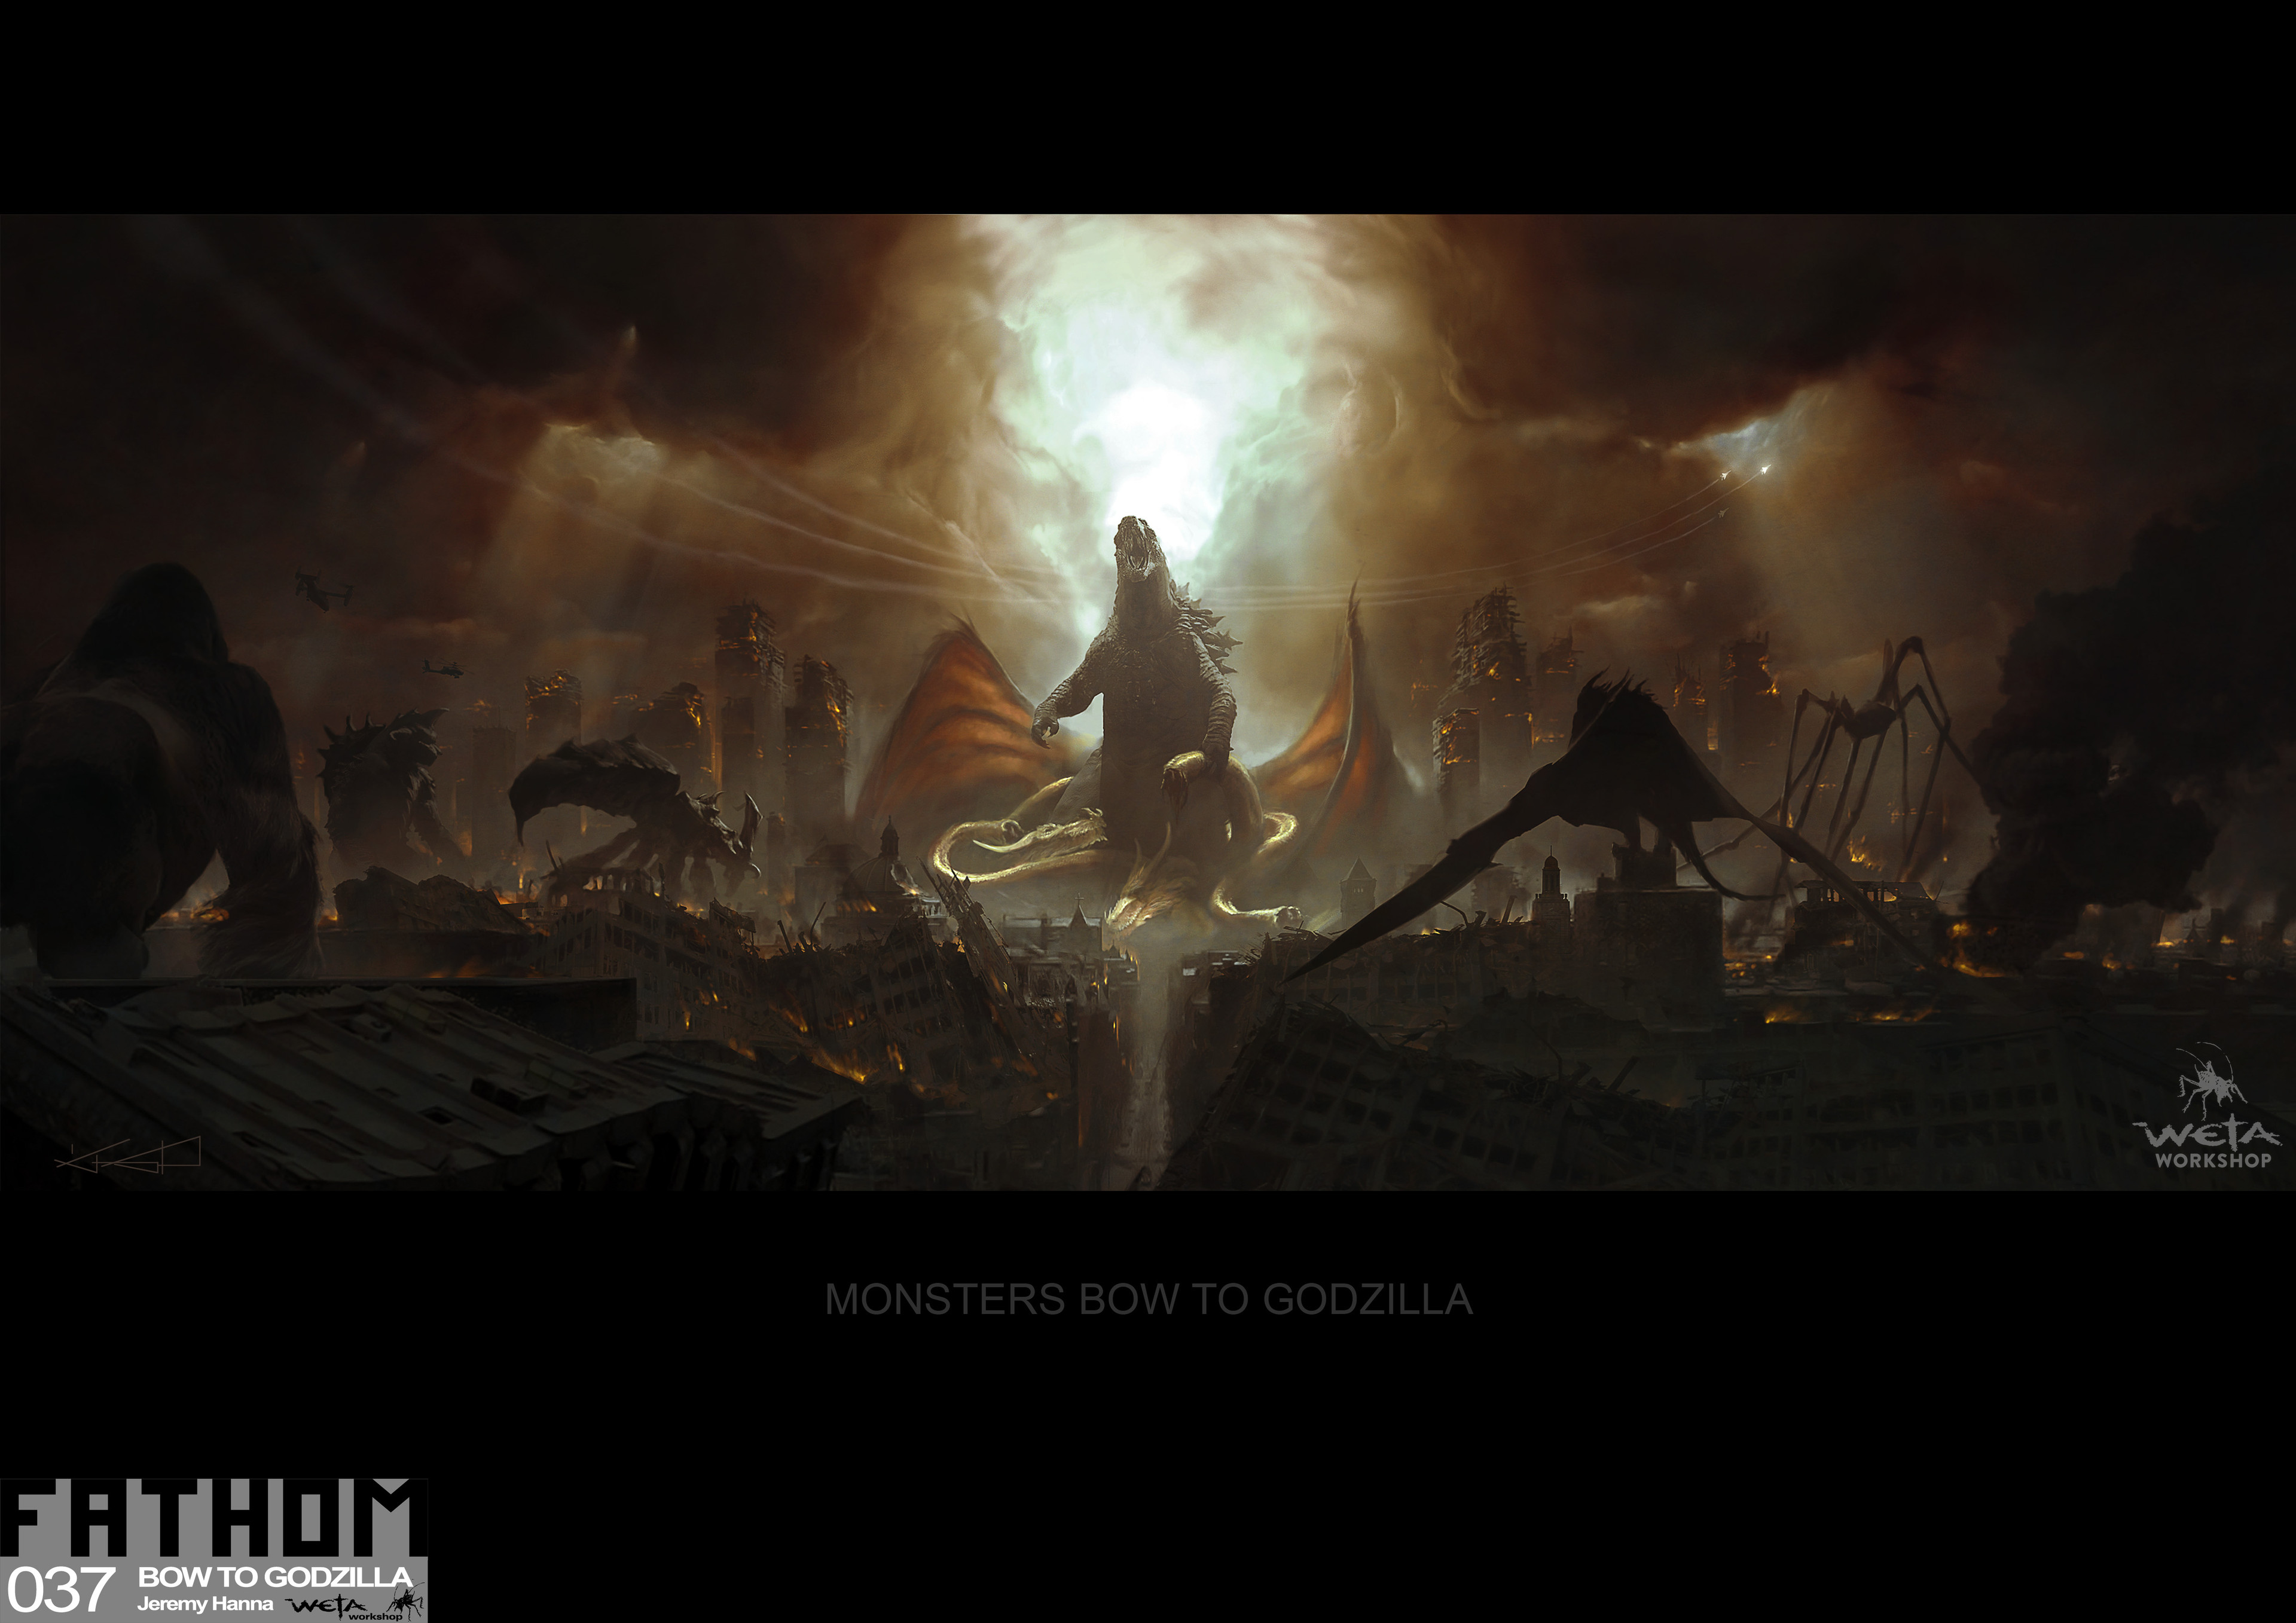 Bow to Godzilla - Artist: Jeremy Hanna